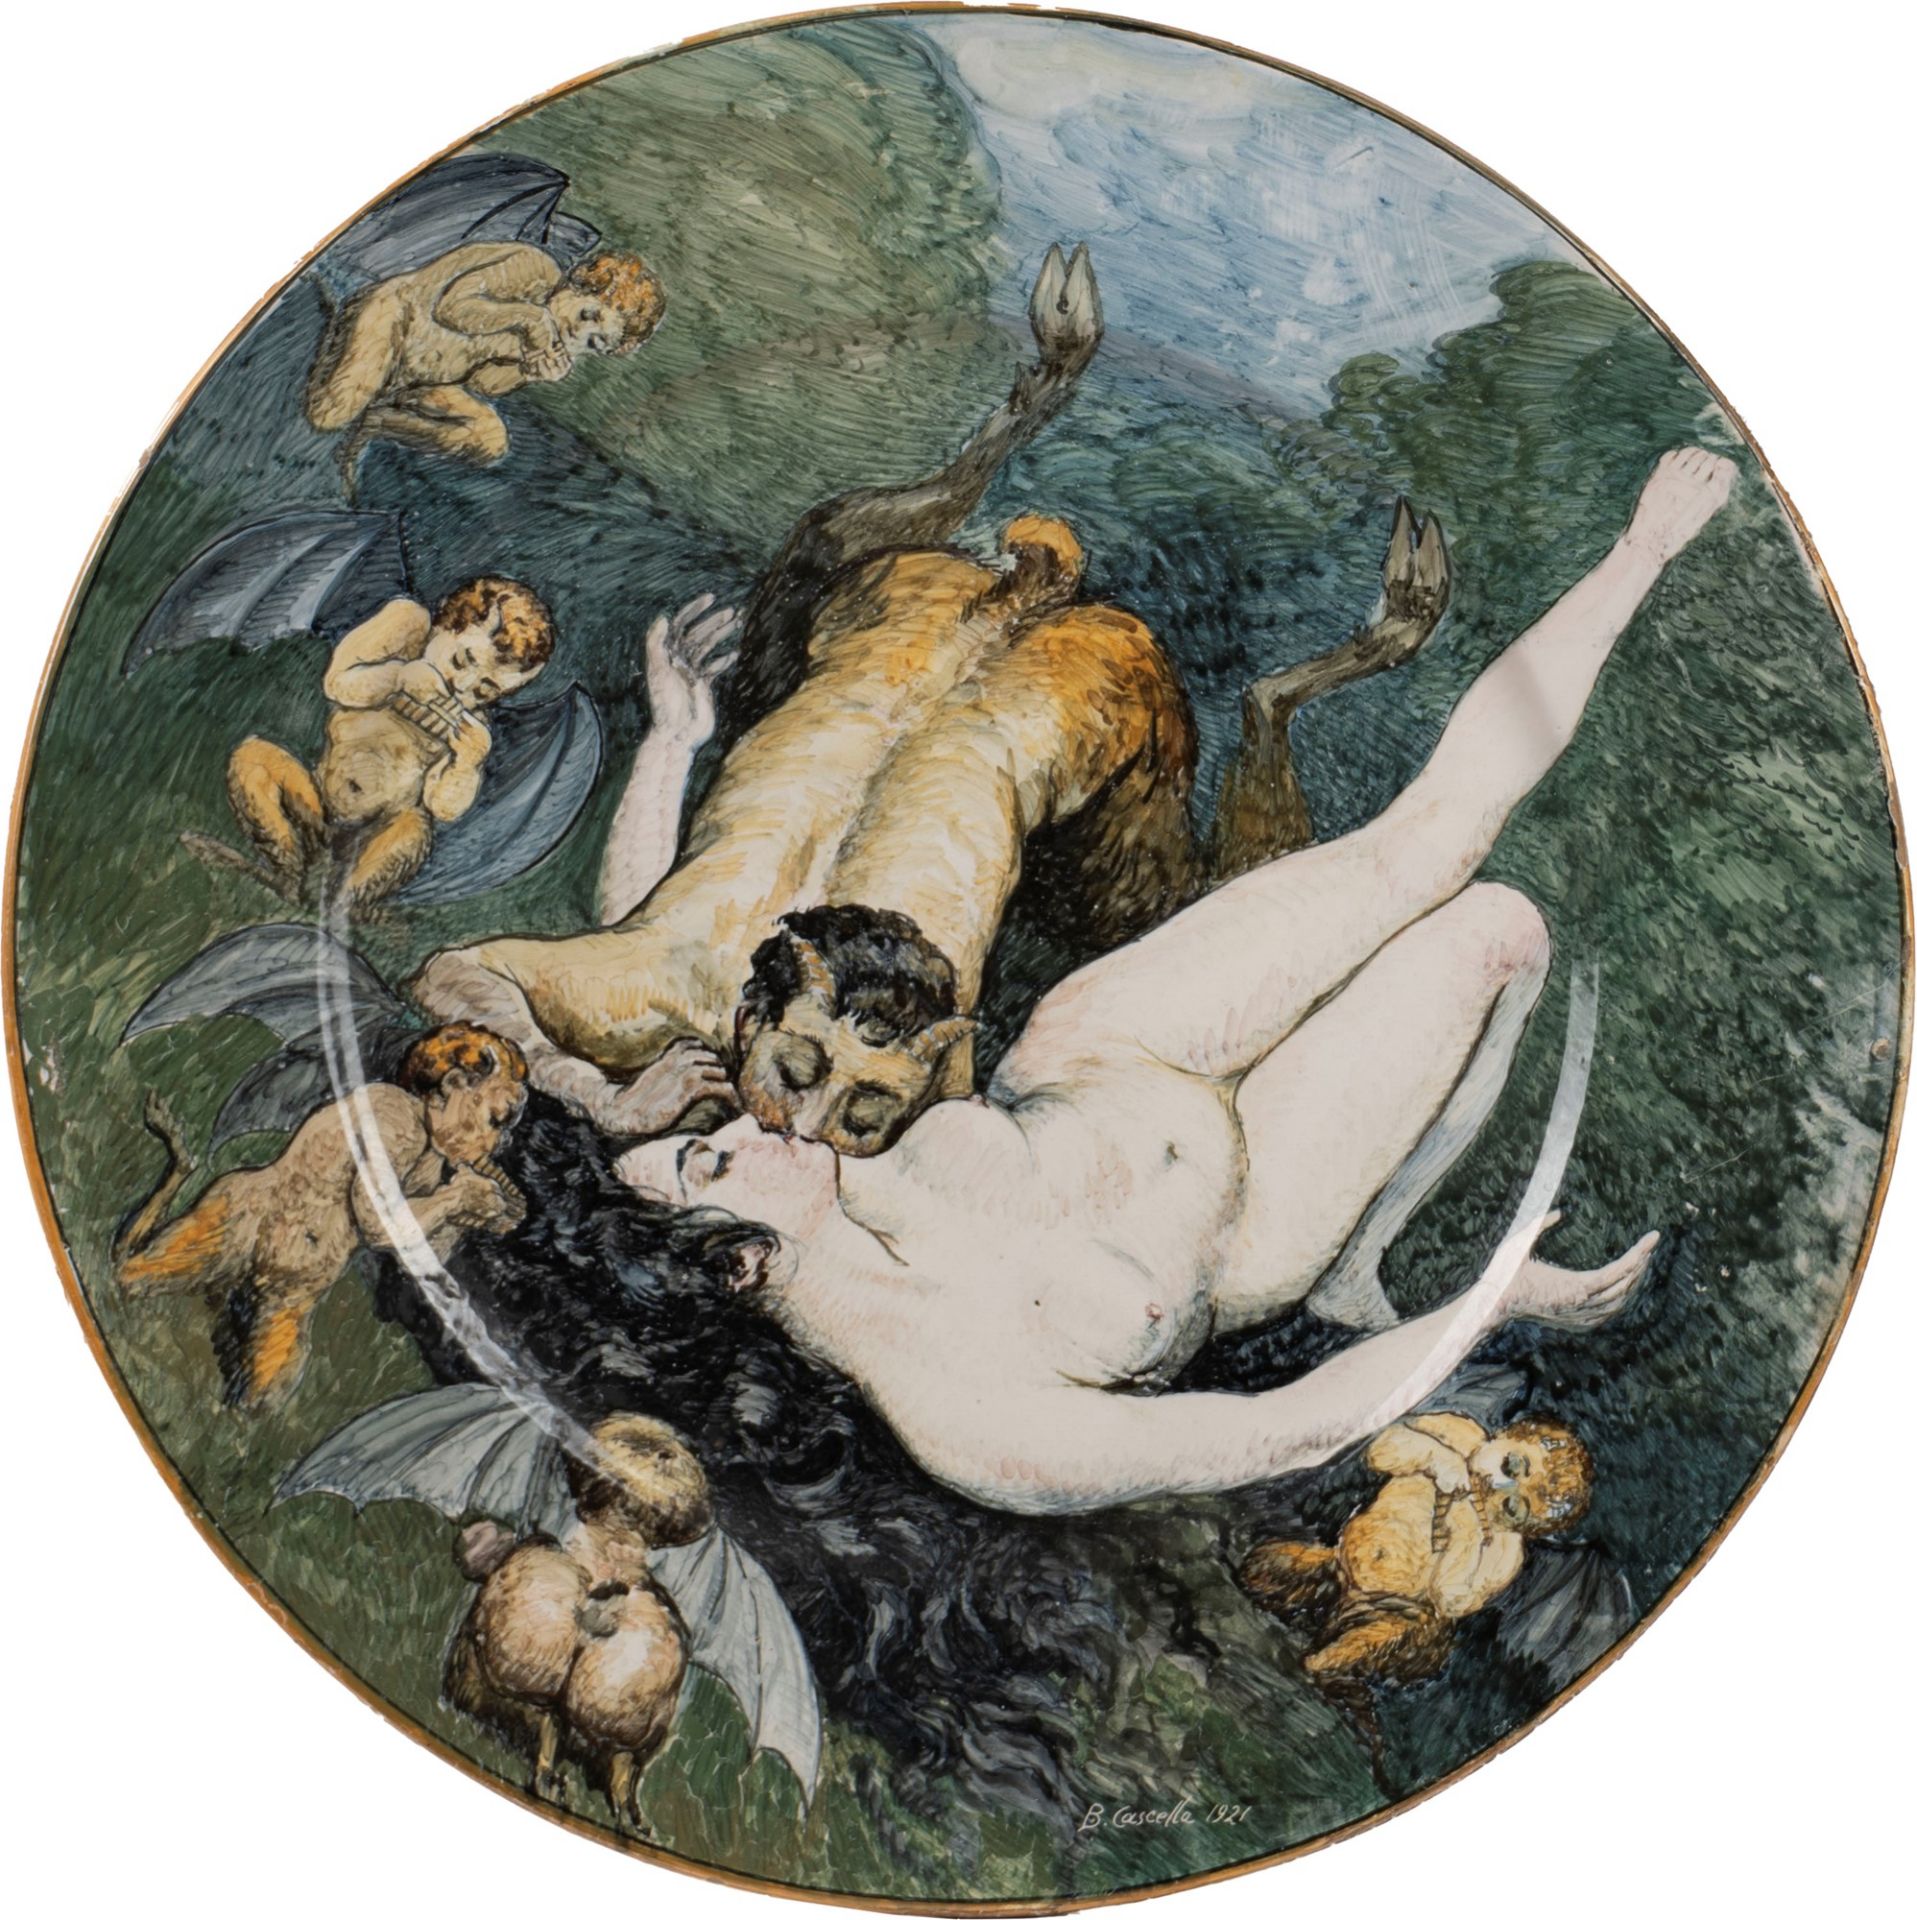 Basilio Cascella (Pescara 1860-Roma 1950) - Plate with nymph and satyr, 1921